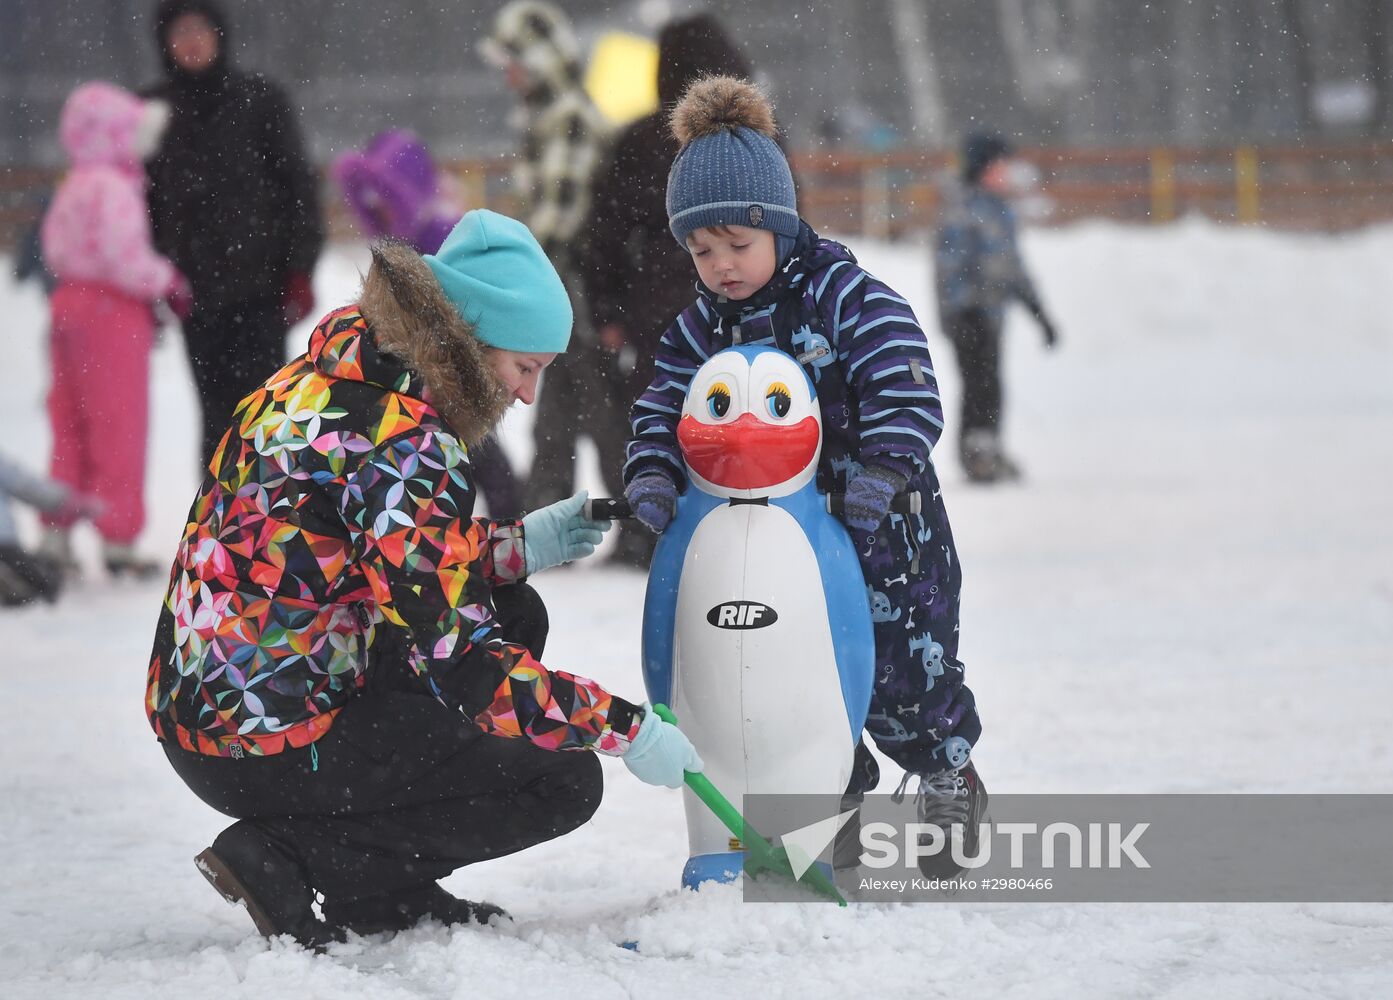 Serebryany Lyod (Silver Ice) skating rink opens in Izmaylovsky Park